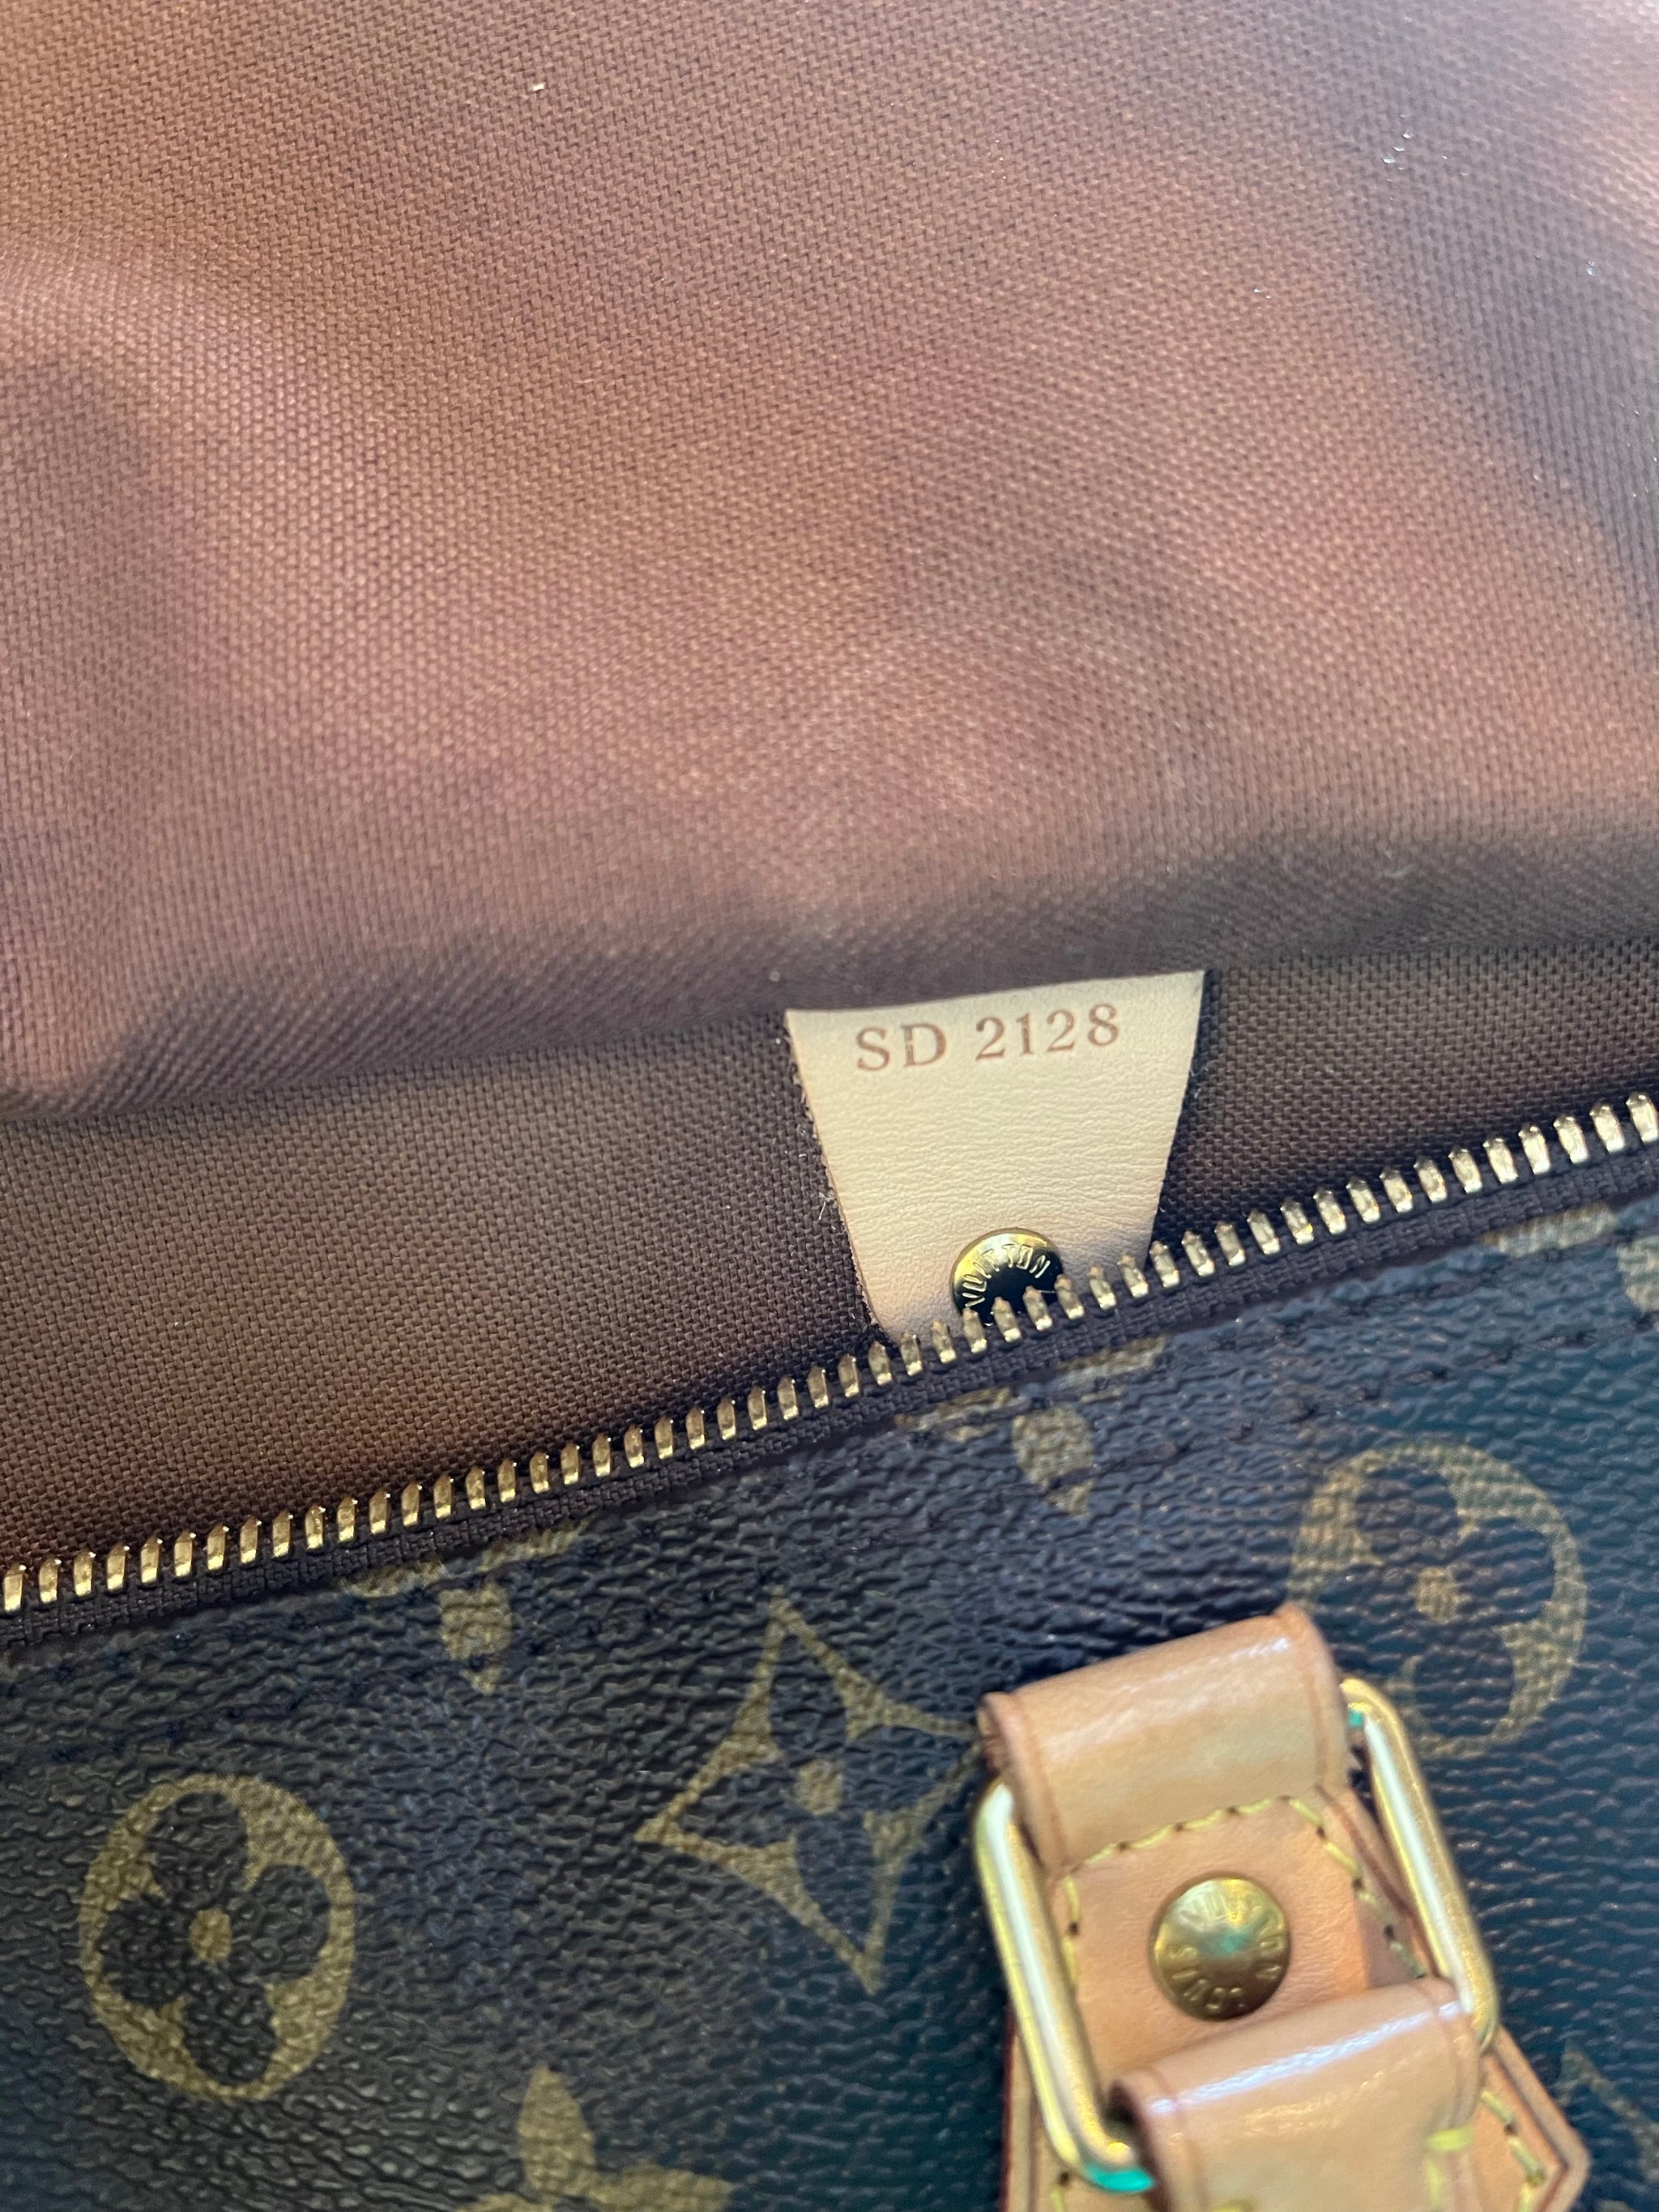 Speedy bandoulière leather handbag Louis Vuitton Brown in Leather